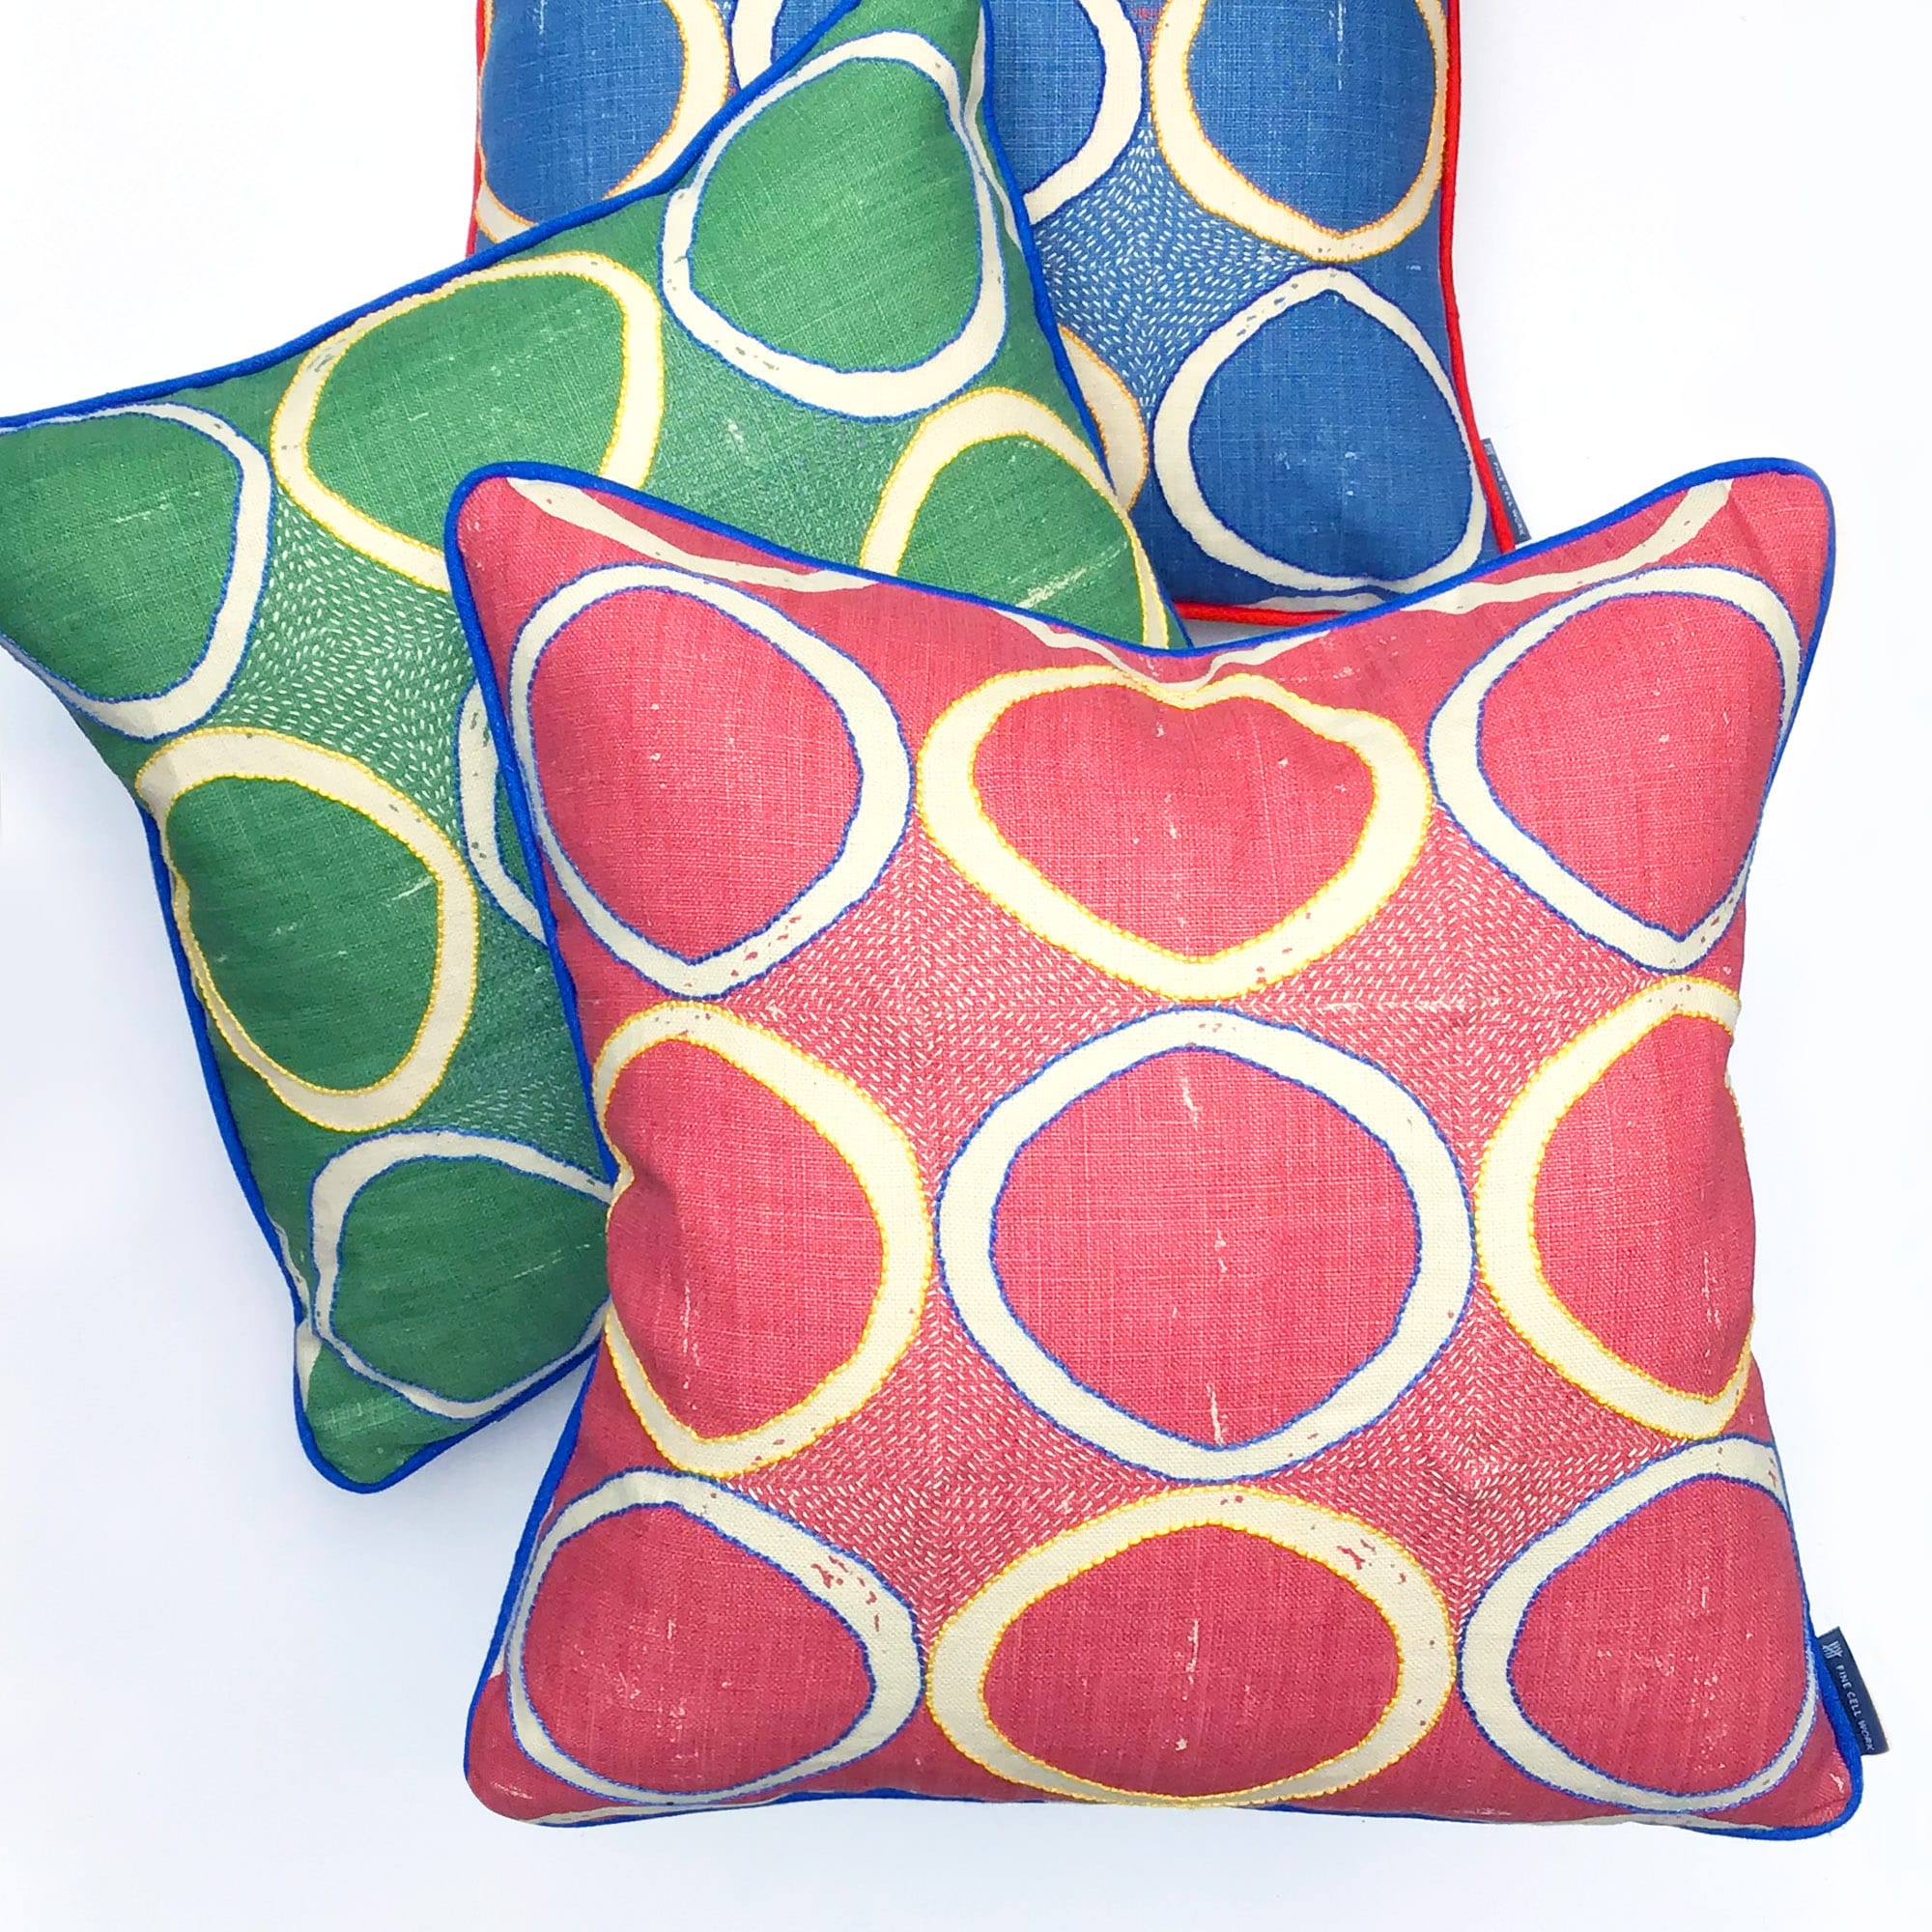 Fine-Cell-Work-Berry-Red-Leaf-Green-Cobalt-Blue-Circles-Blithfield-Kit-Kemp-Hand-Embroidered-New-Linen-Cushions-Collaboration_07d9b5ff-5c62-42e8-89e5-3da0a48f293c.jpg